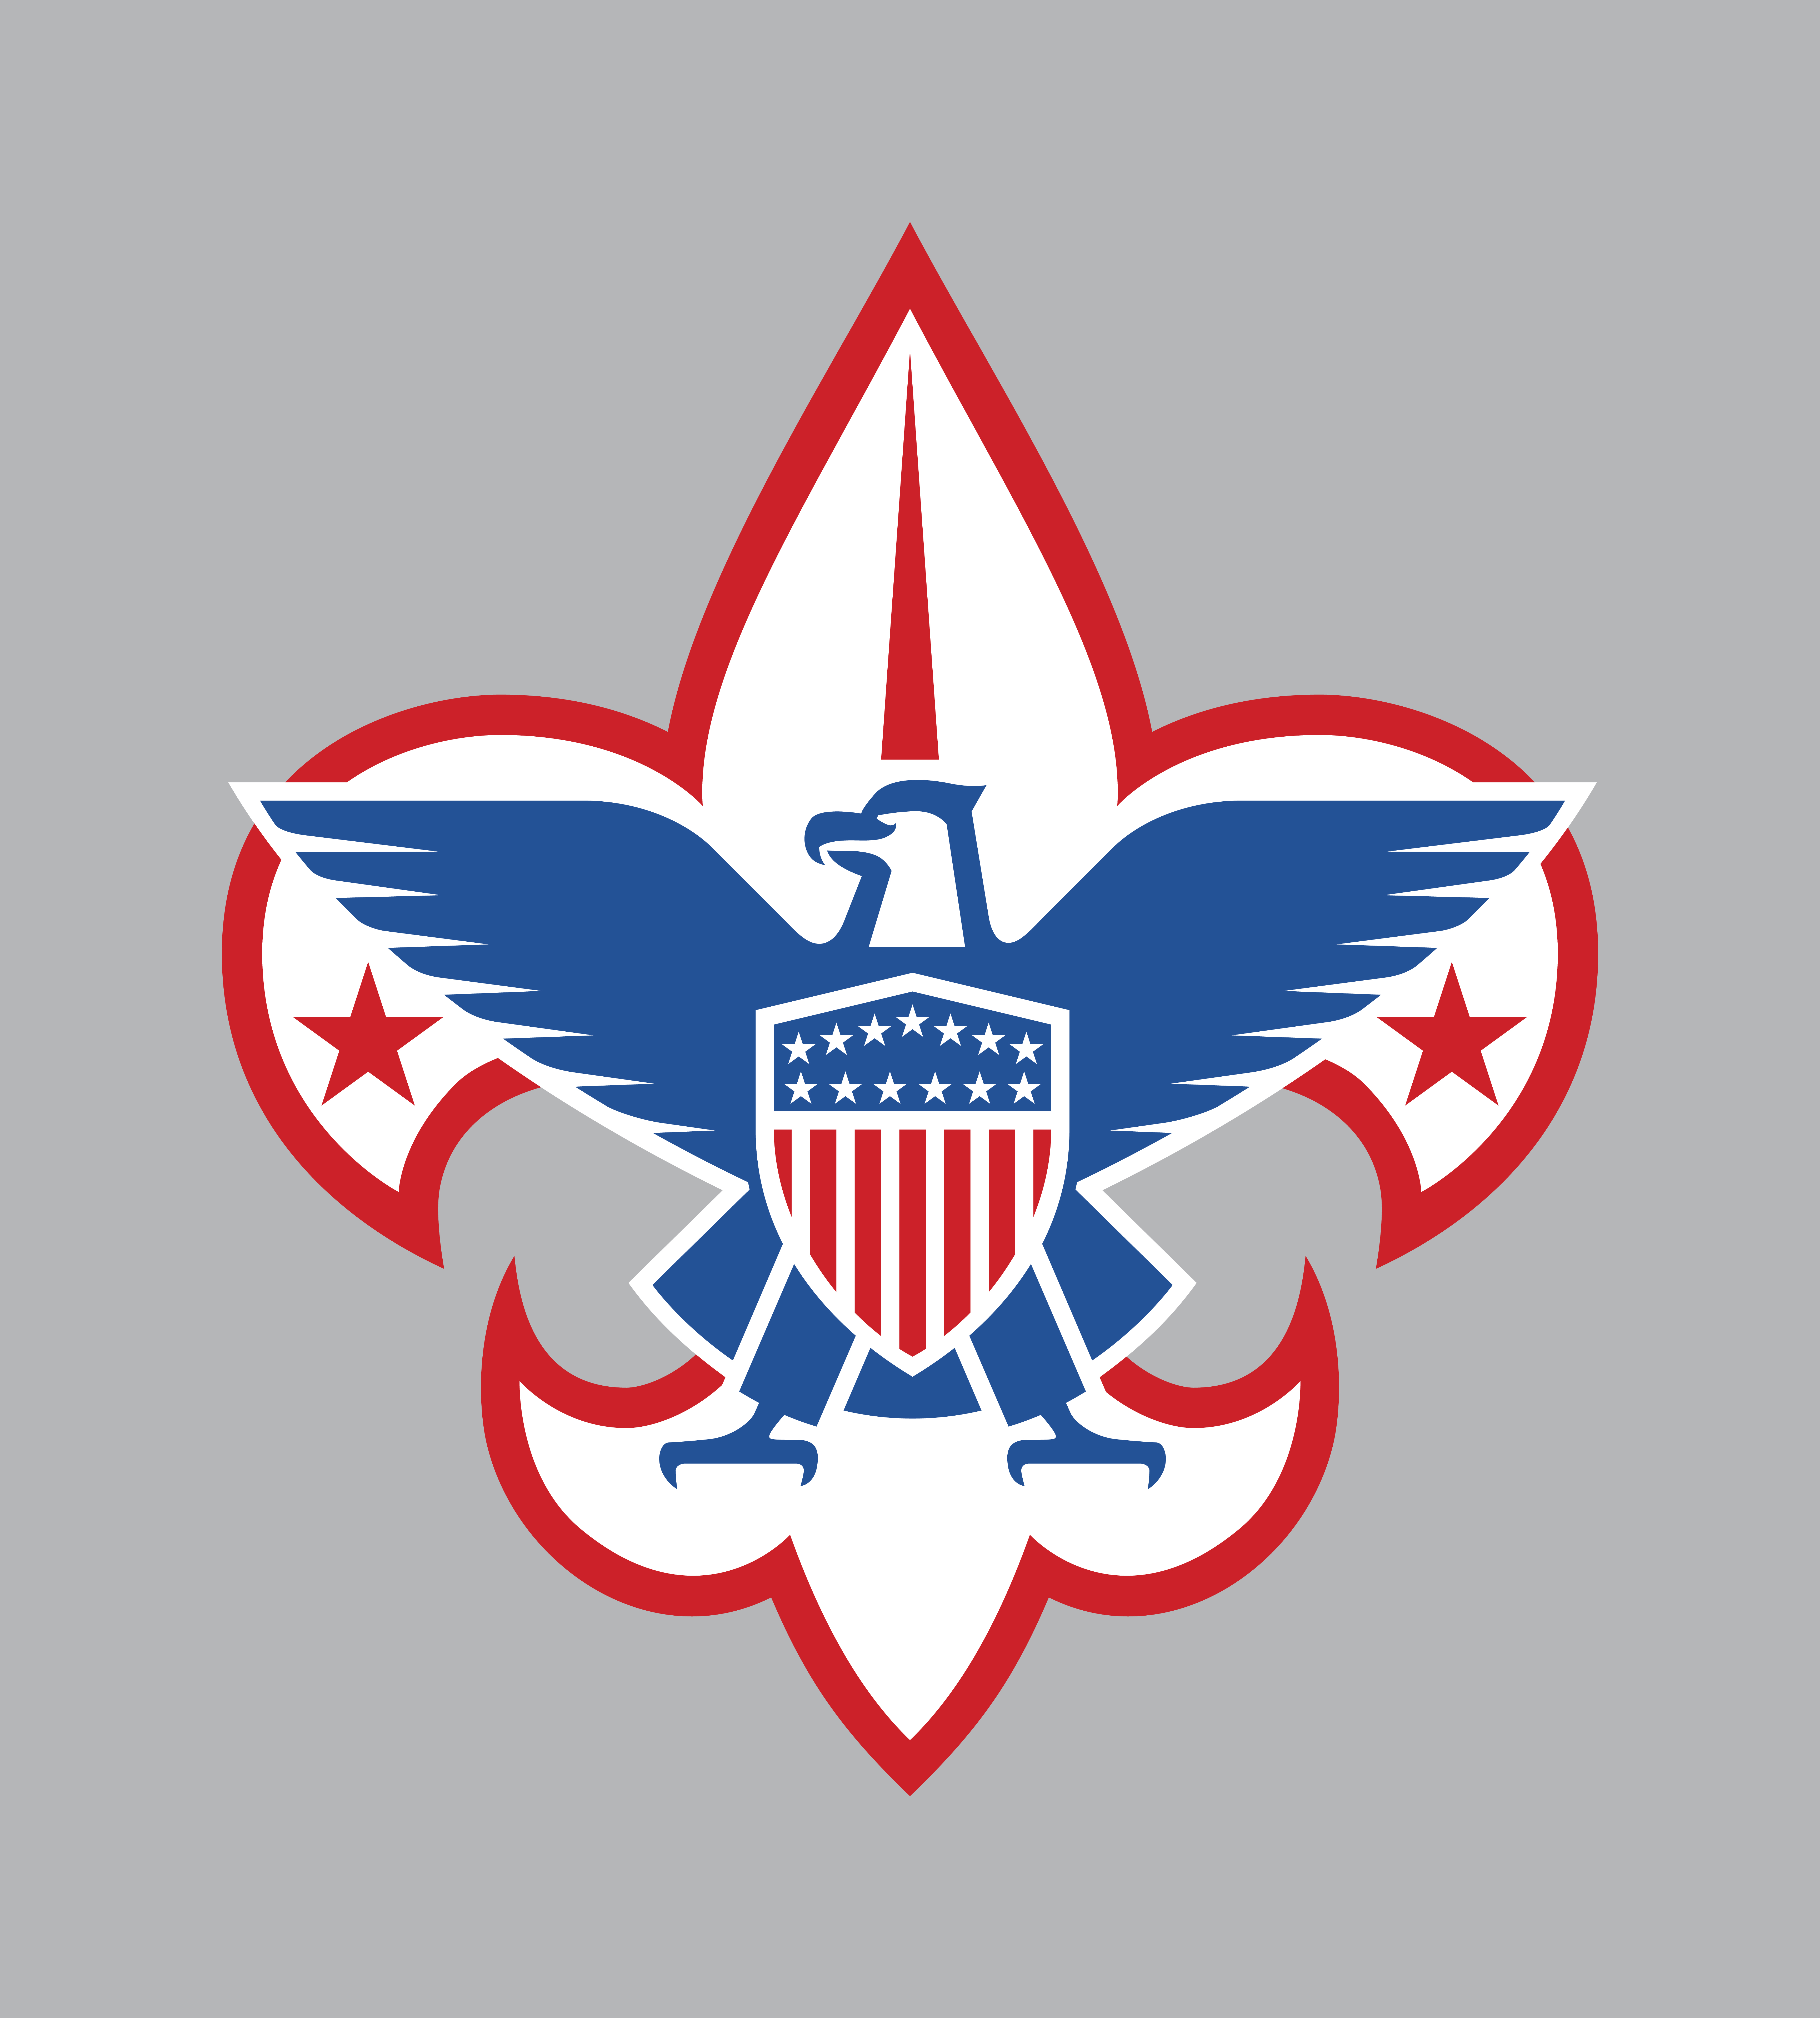 Eagle Scout medal (Boy Scouts